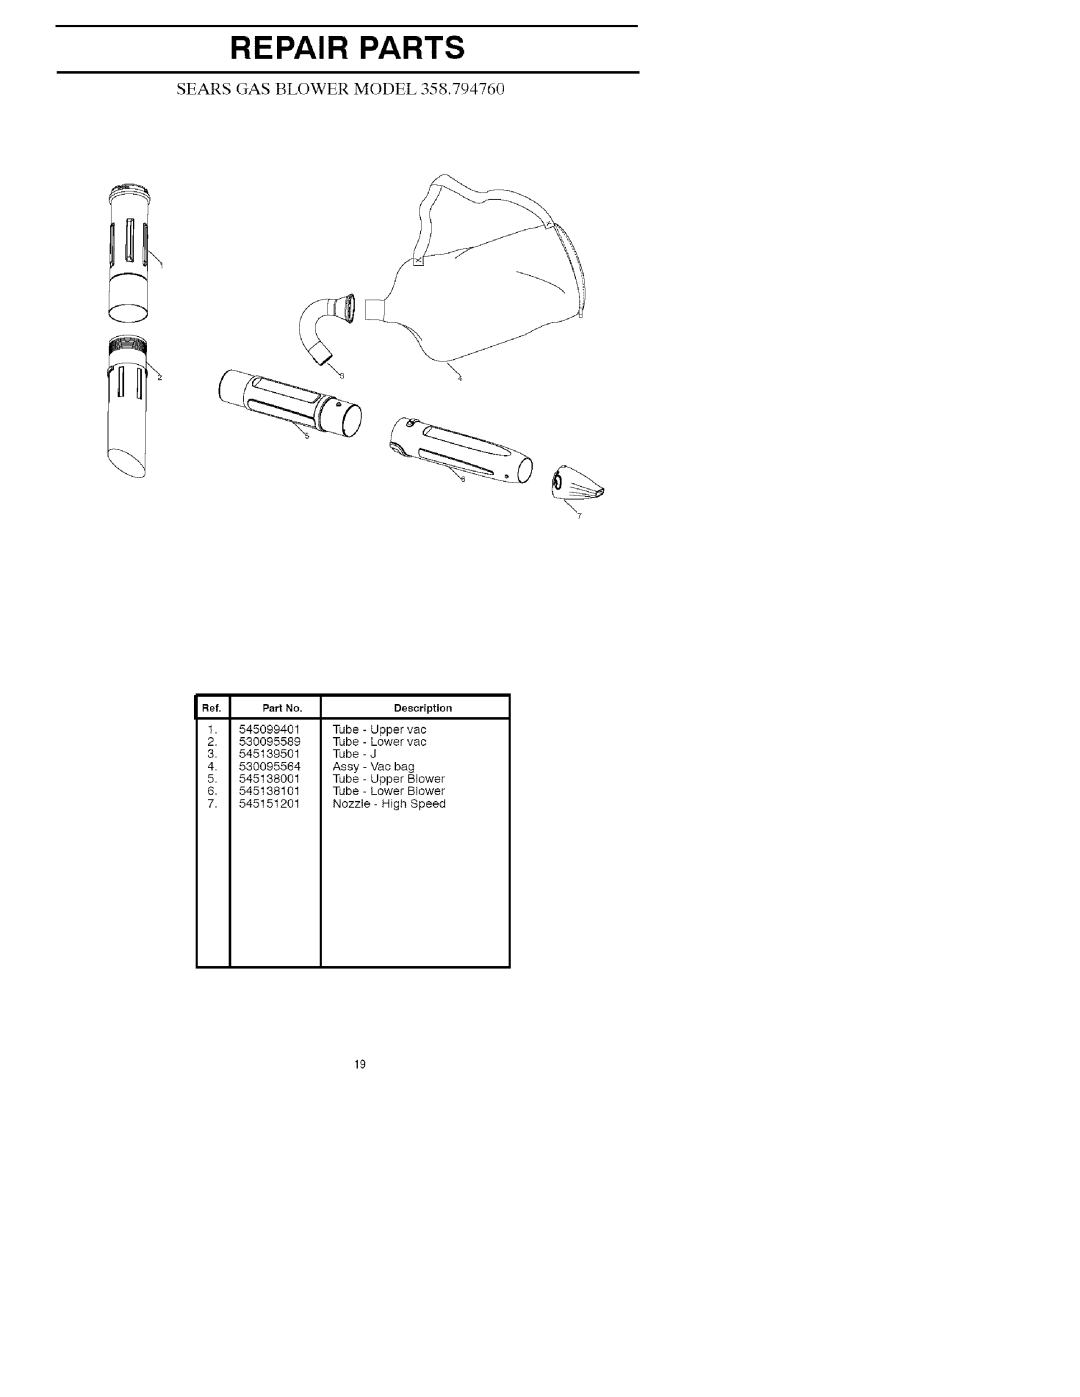 Craftsman 358.79476 manual Repair Parts, Sears Gas Blower Model, I Ref, Part No, Description 